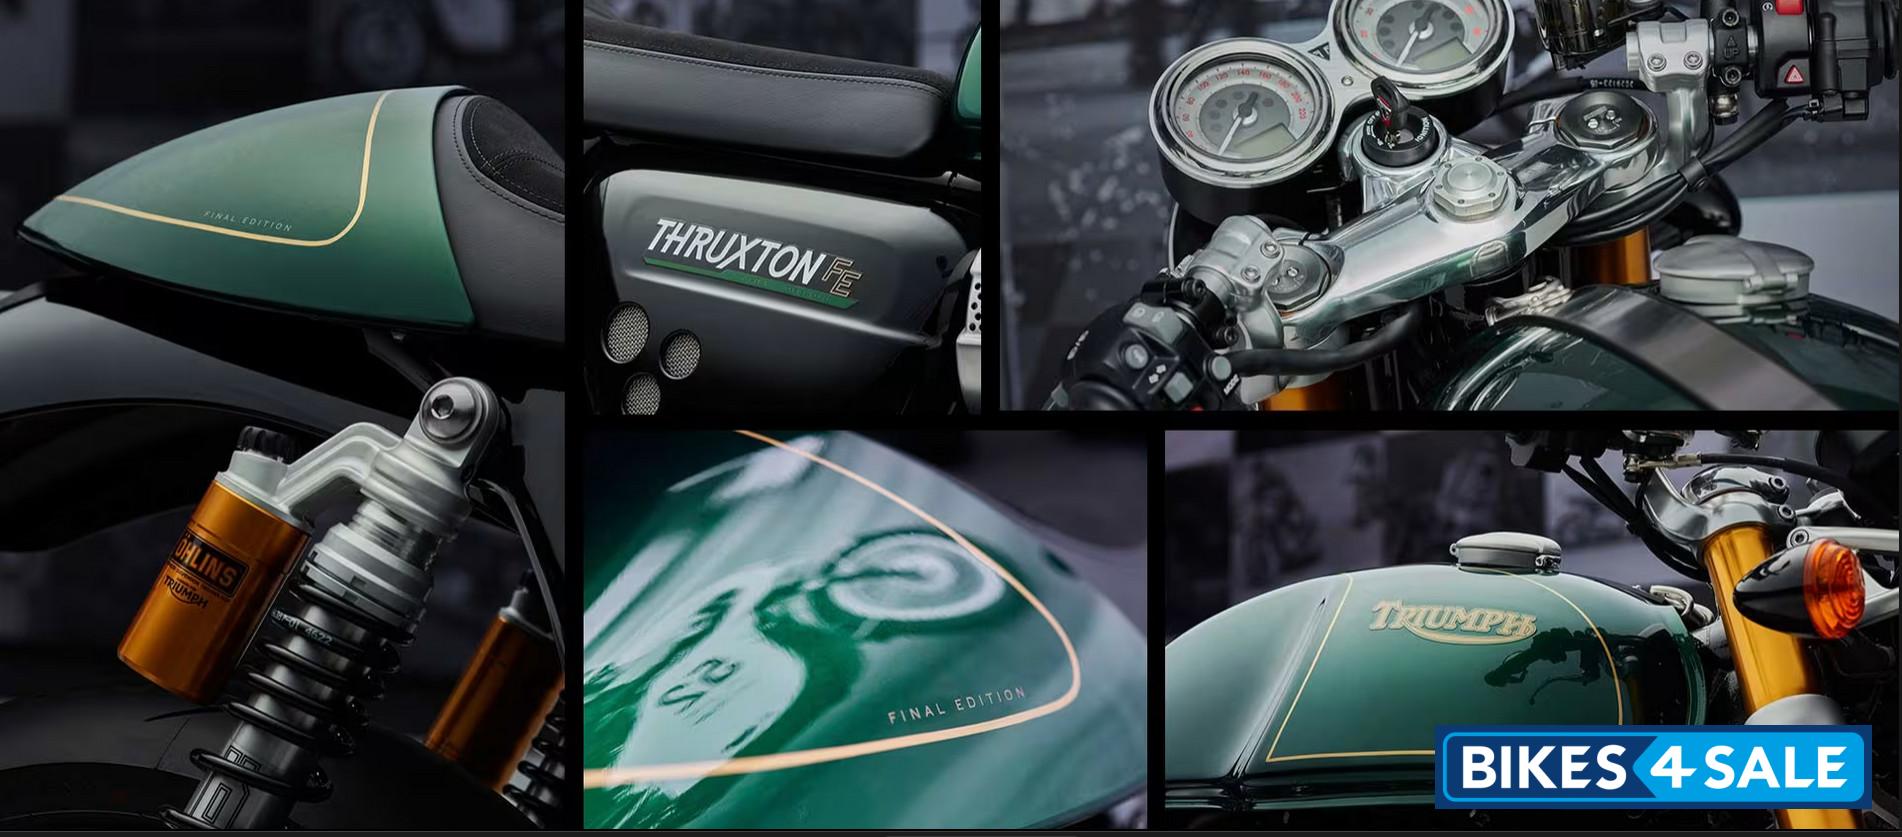 Triumph Thruxton Price In India: Triumph unveils Thruxton final edition, ET  Auto